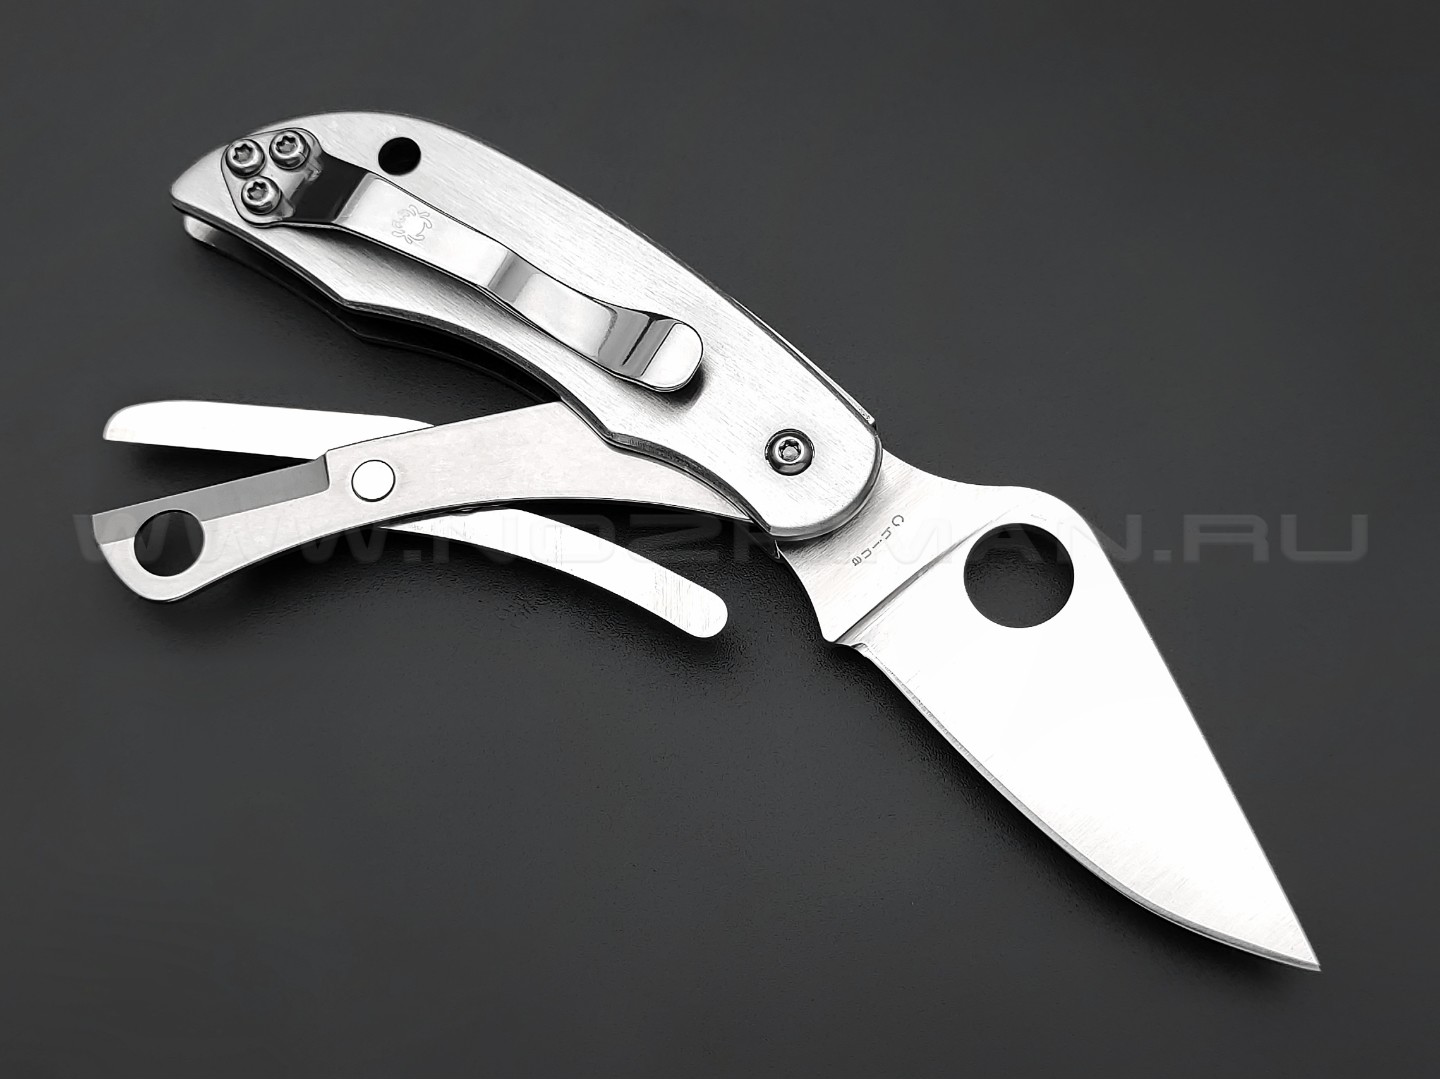 Нож Spyderco ClipiTool Scissors C169P сталь 8Cr13MoV, рукоять Stainless Steel